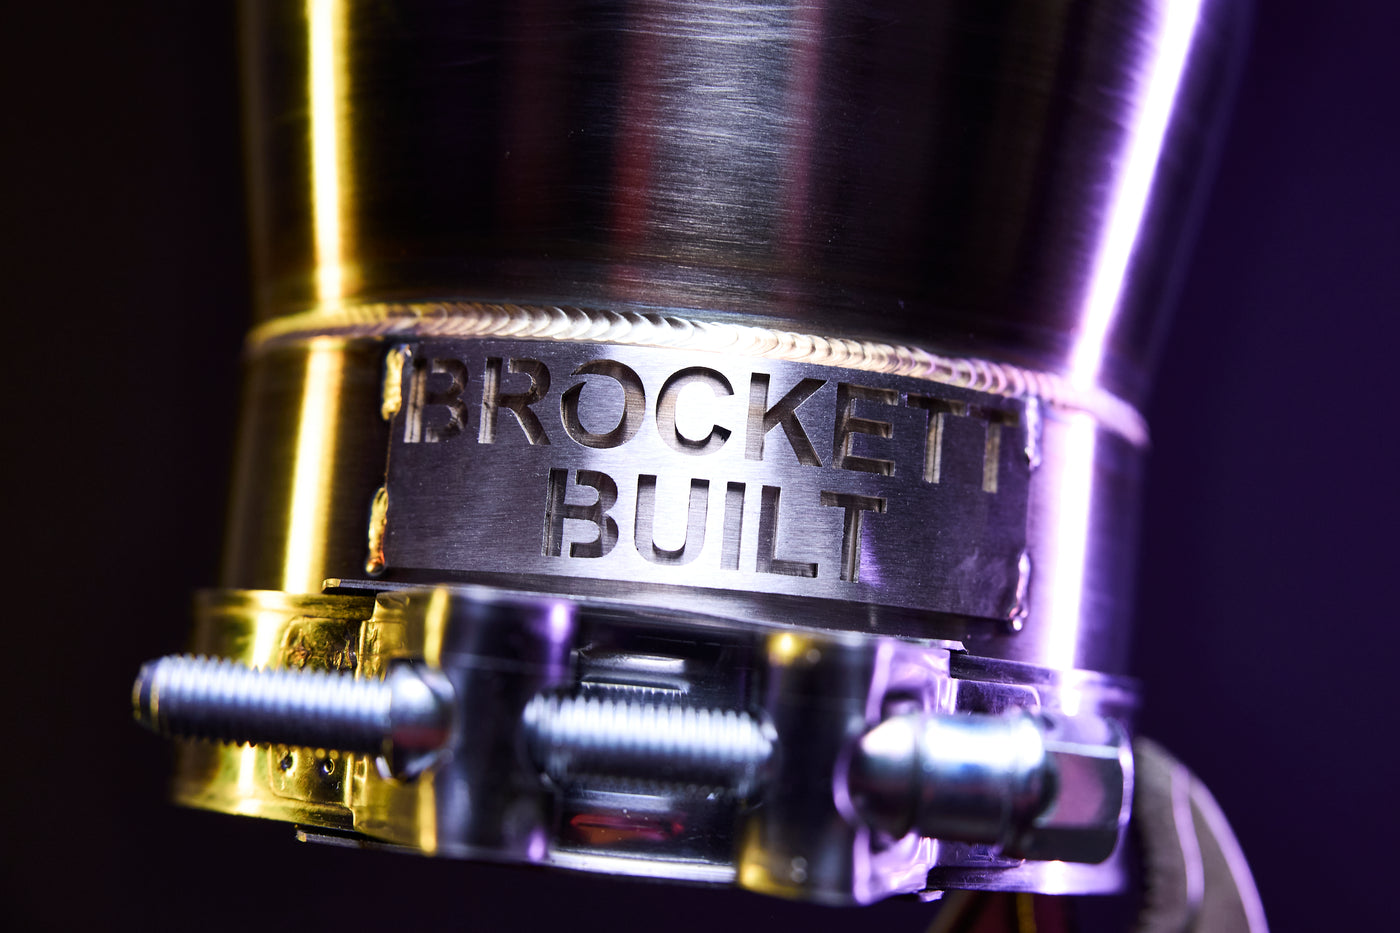 Brockett Built Exhaust tips